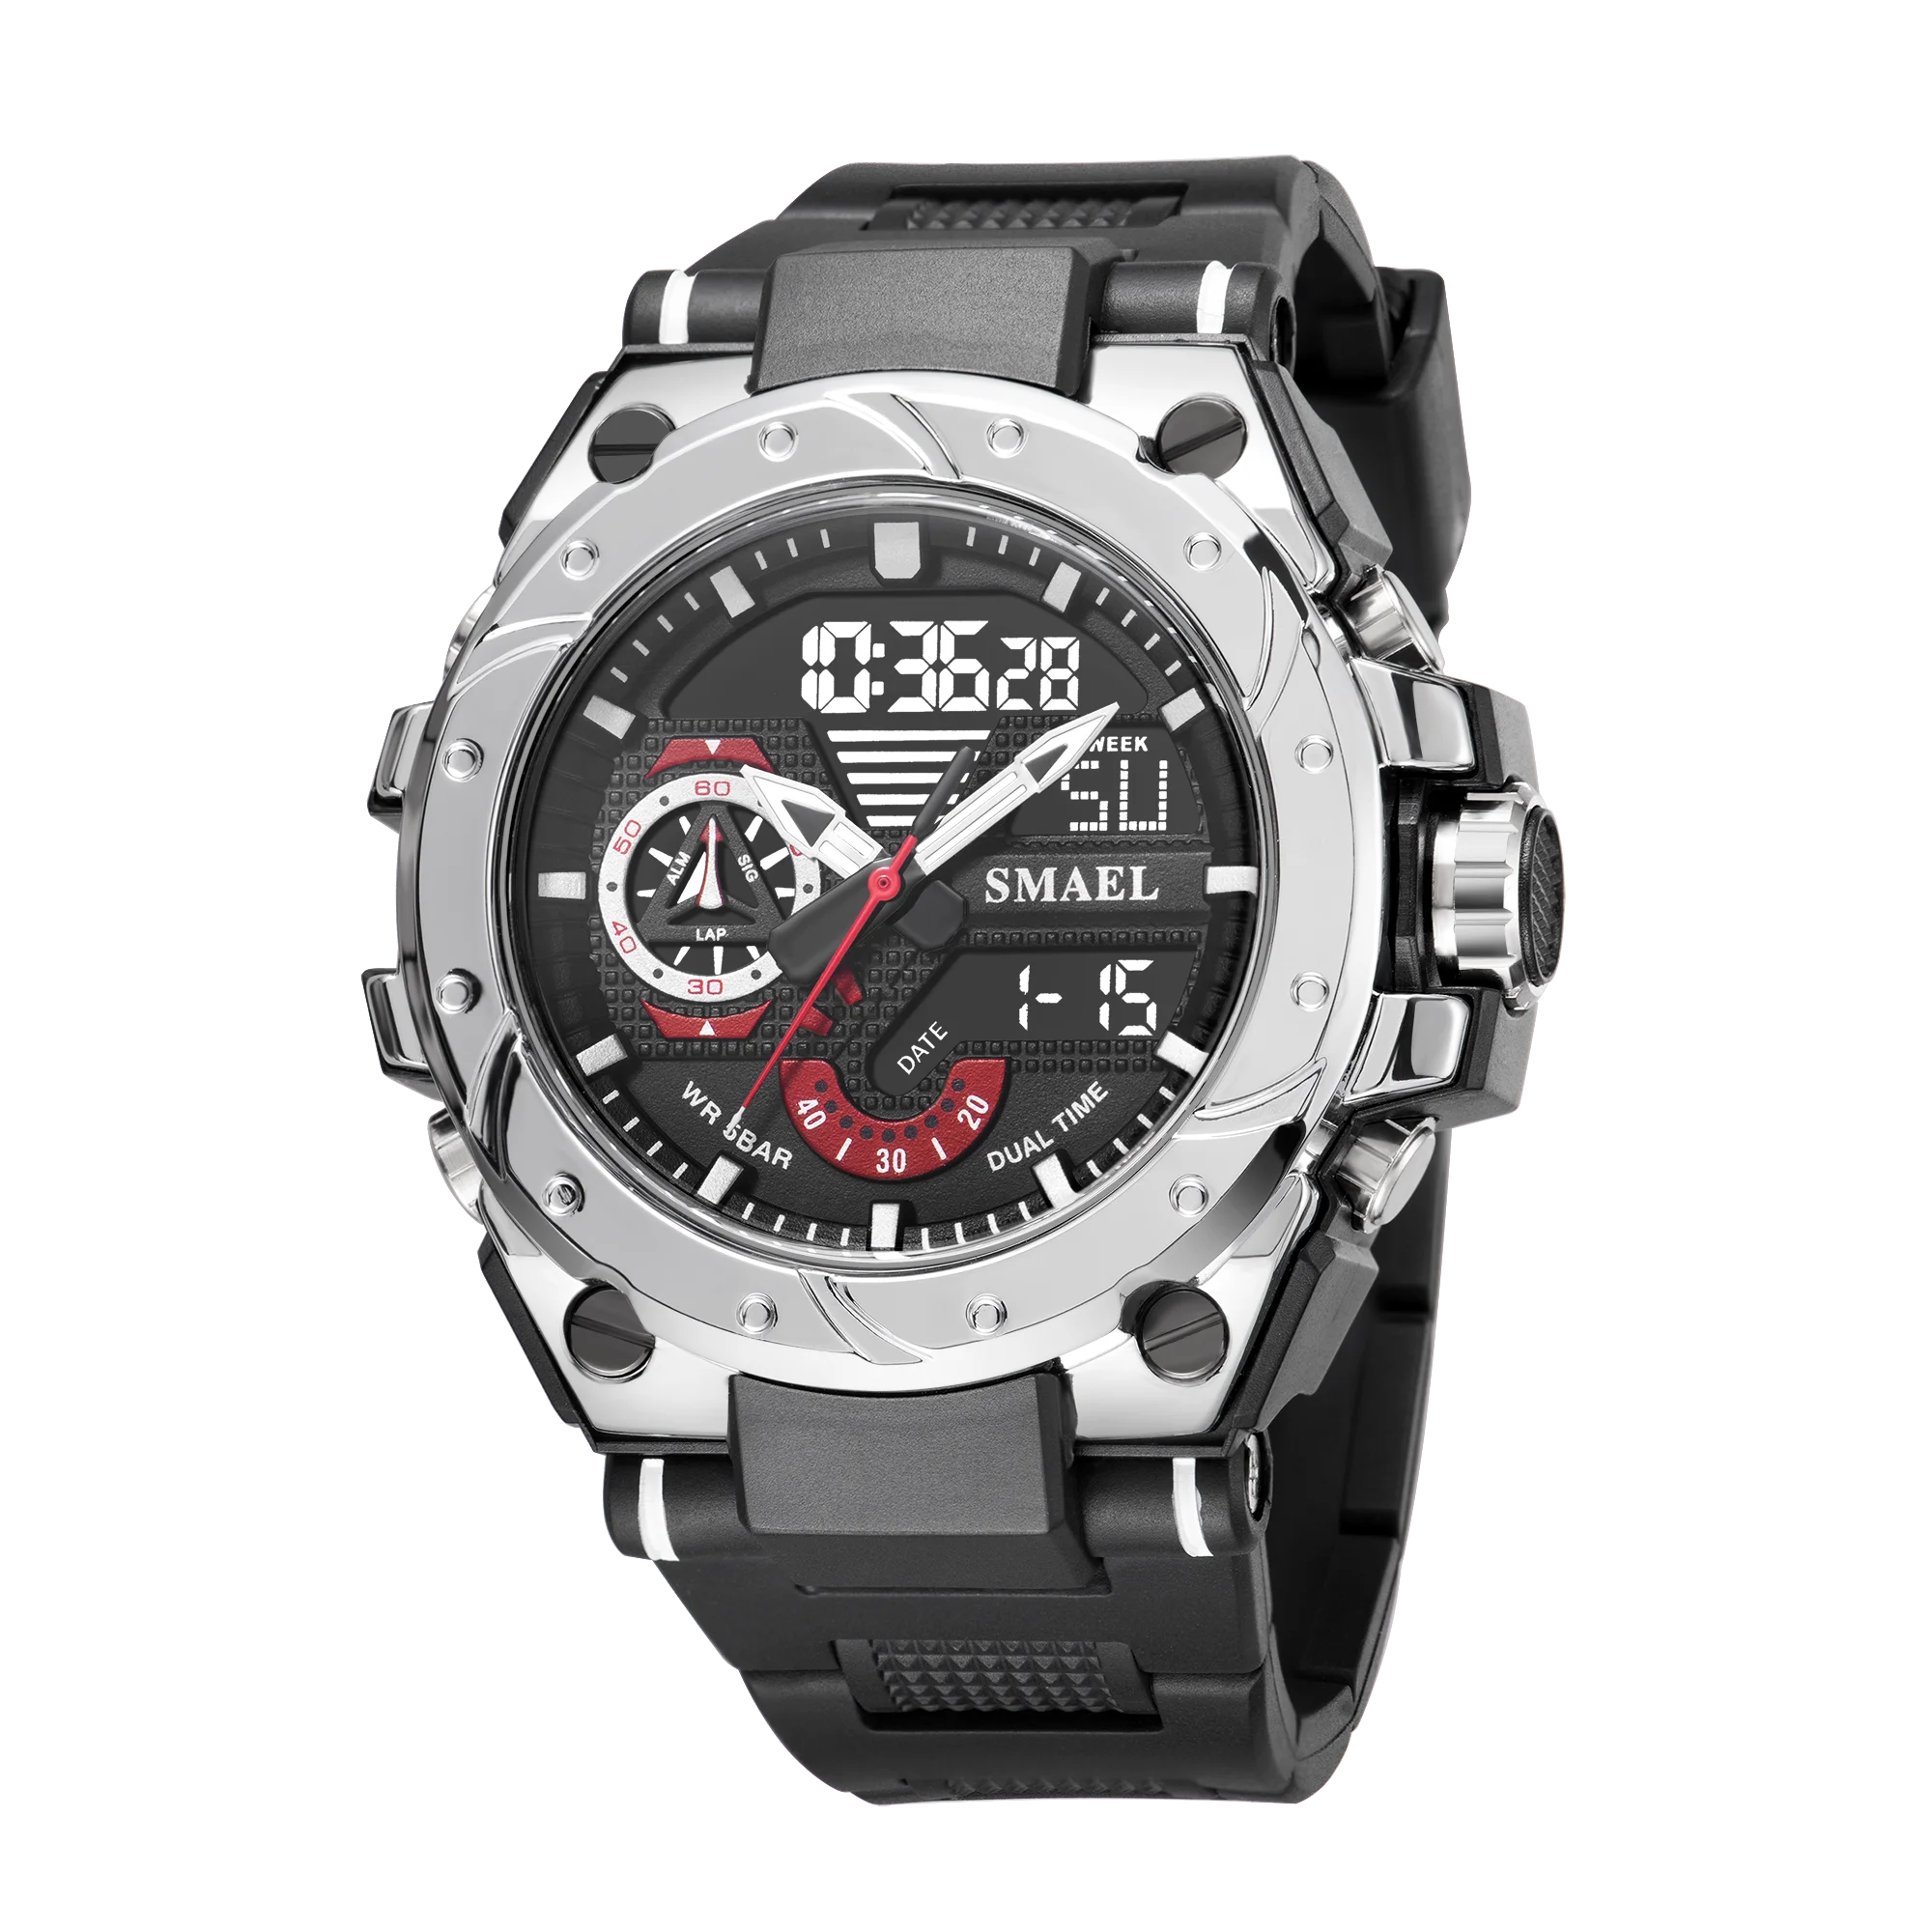 KIMLUD, Quartz Watch For Men SMAEL Wristwatches Watcholorful Red Bracelet 50M Waterproof Alarm Clock Analog Digitals 8060 Sport Watches, SILVER / China, KIMLUD Women's Clothes